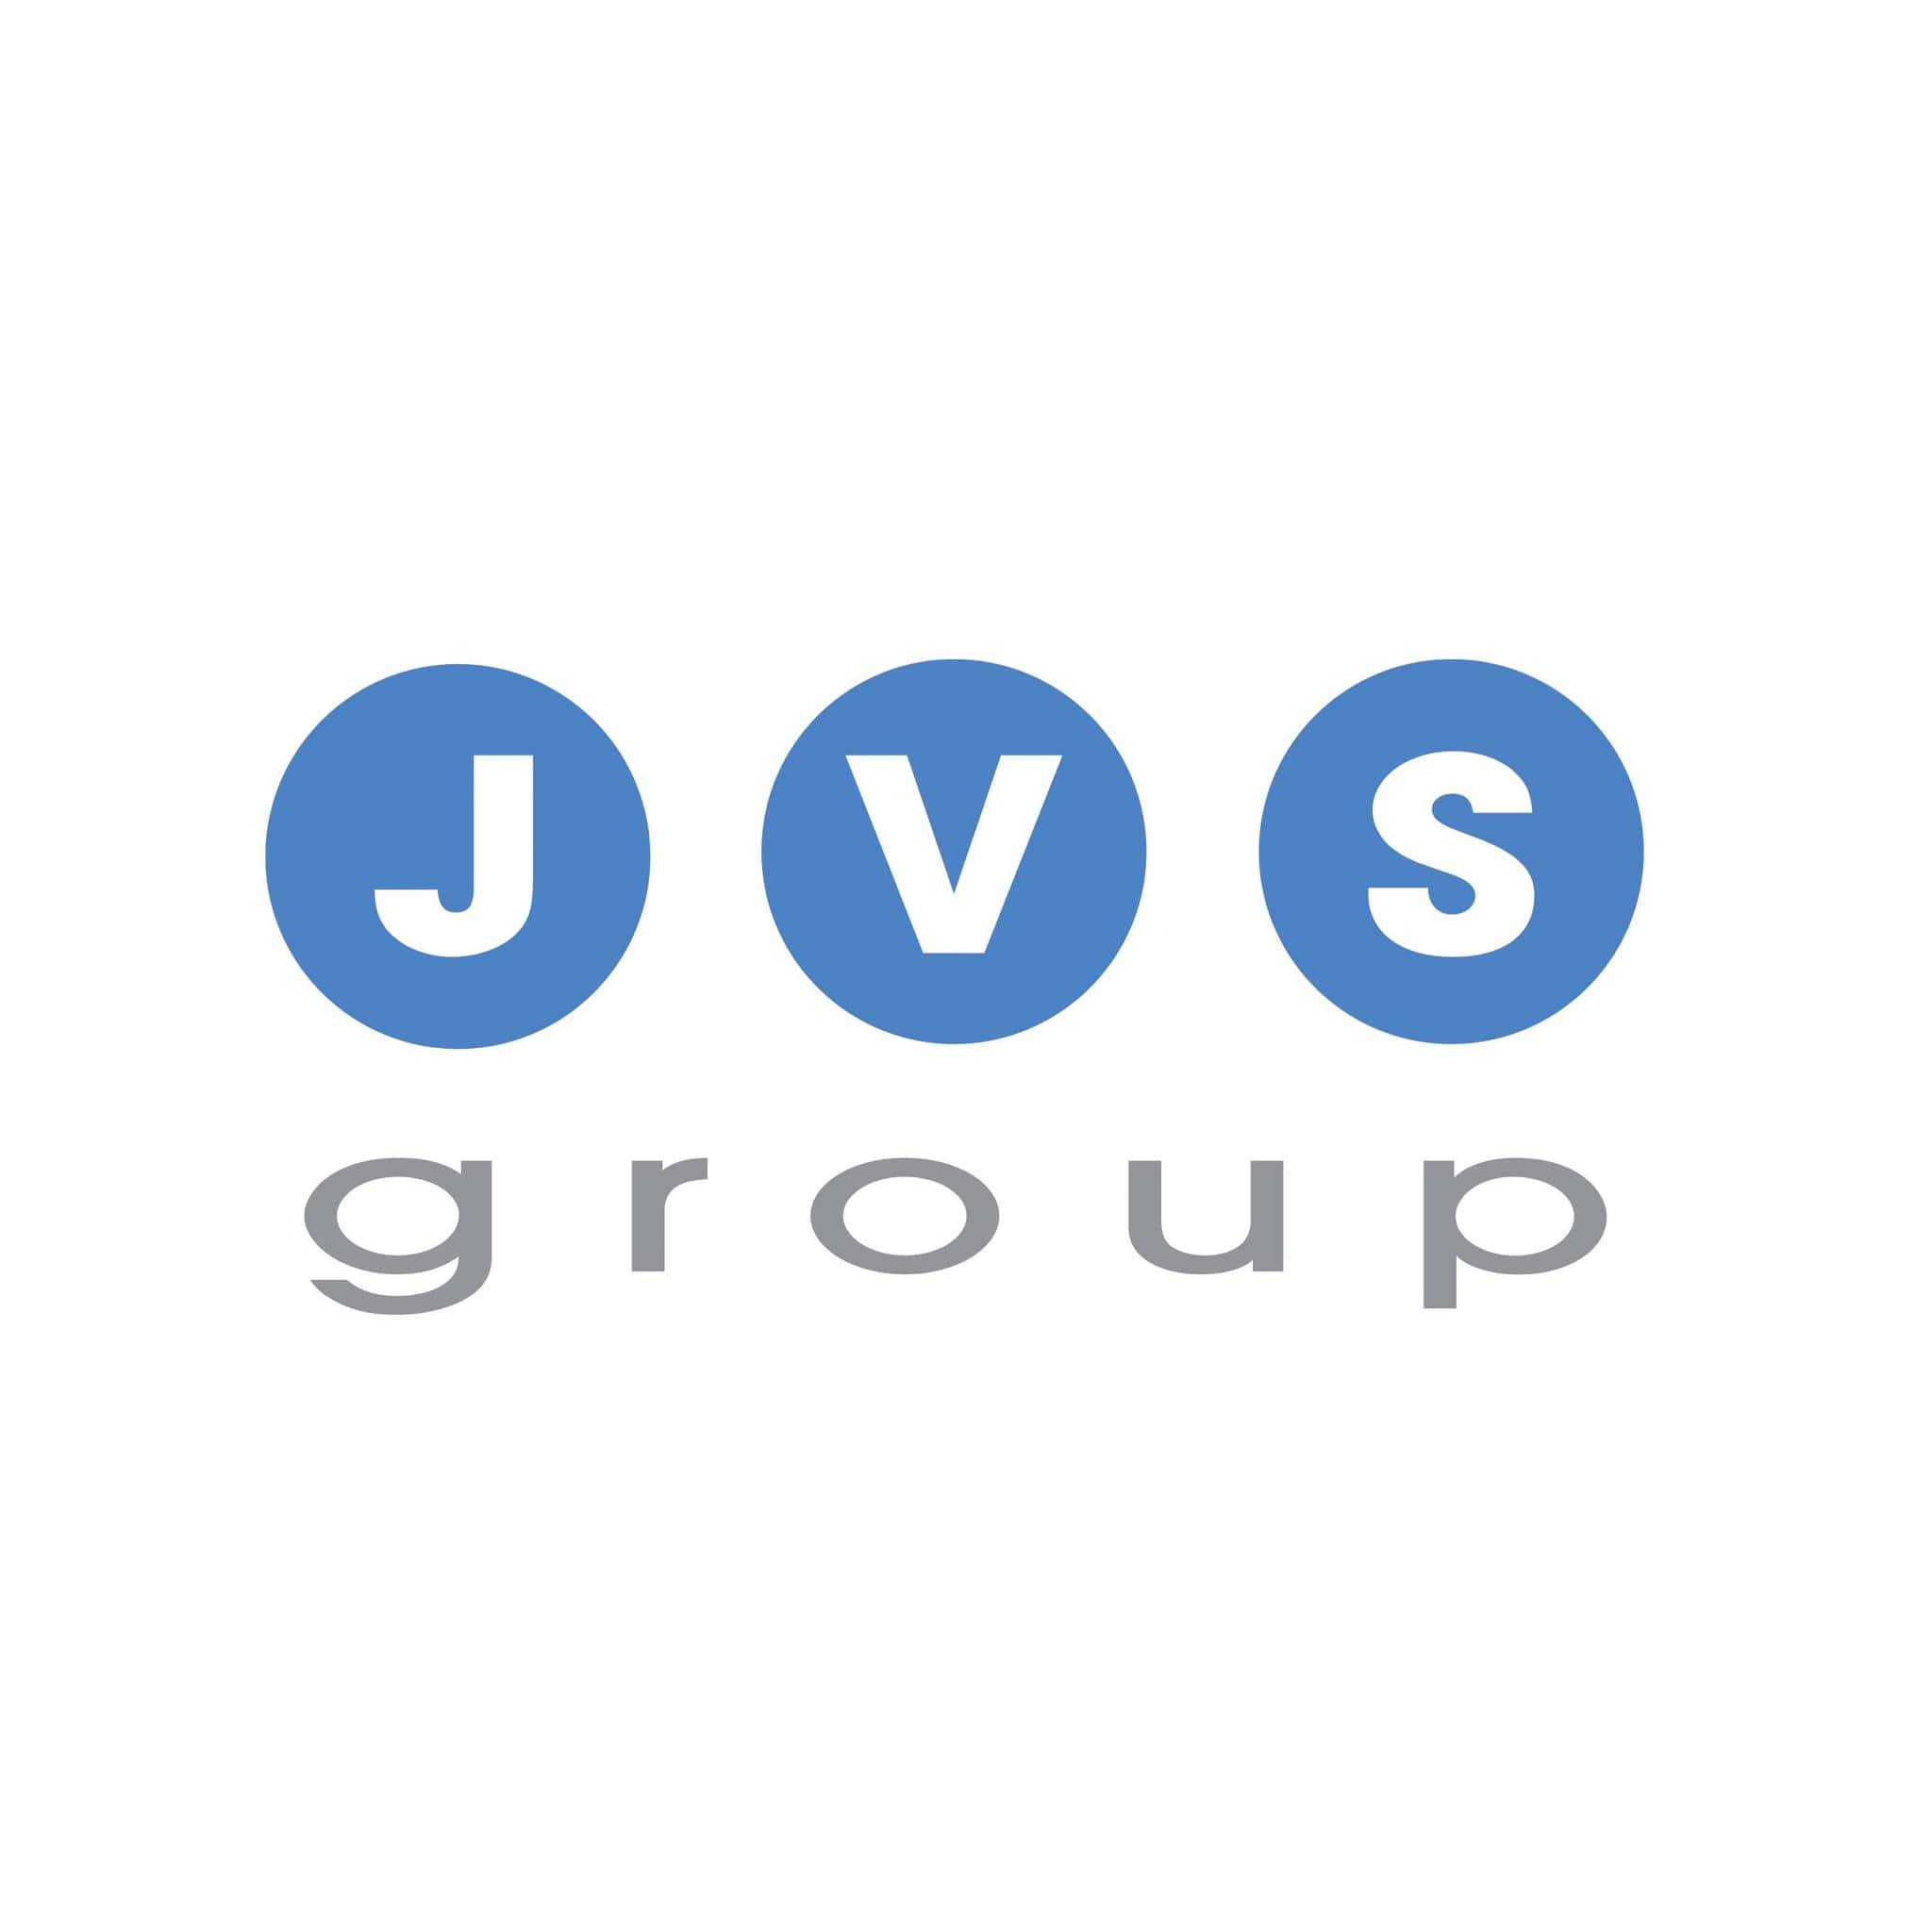 JVS group